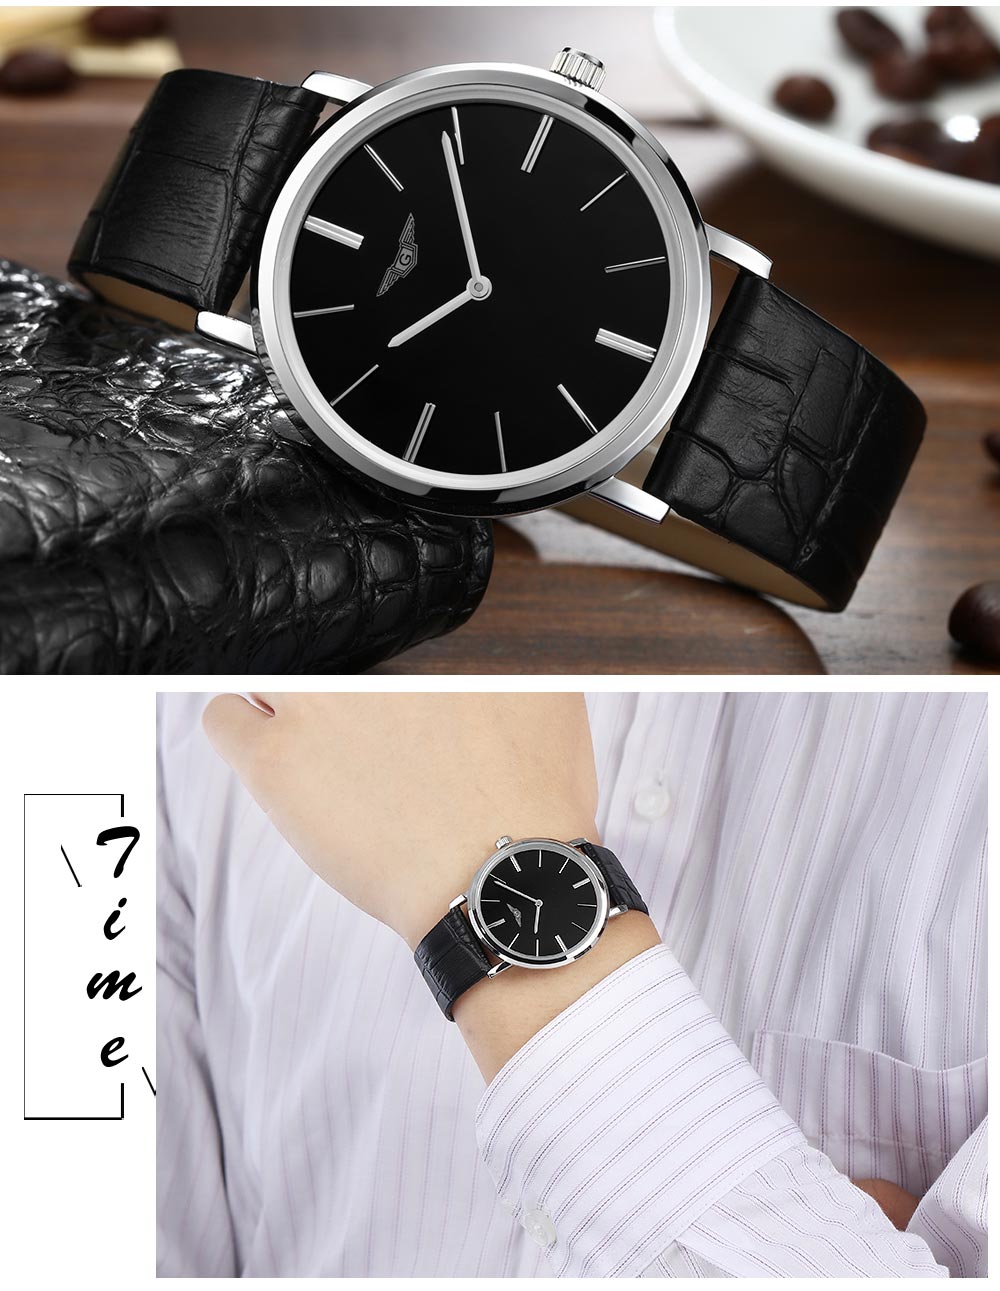 GUANQIN GS19029 Men Quartz Watch Ultrathin Watch Case Genuine Leather Band Wristwatch